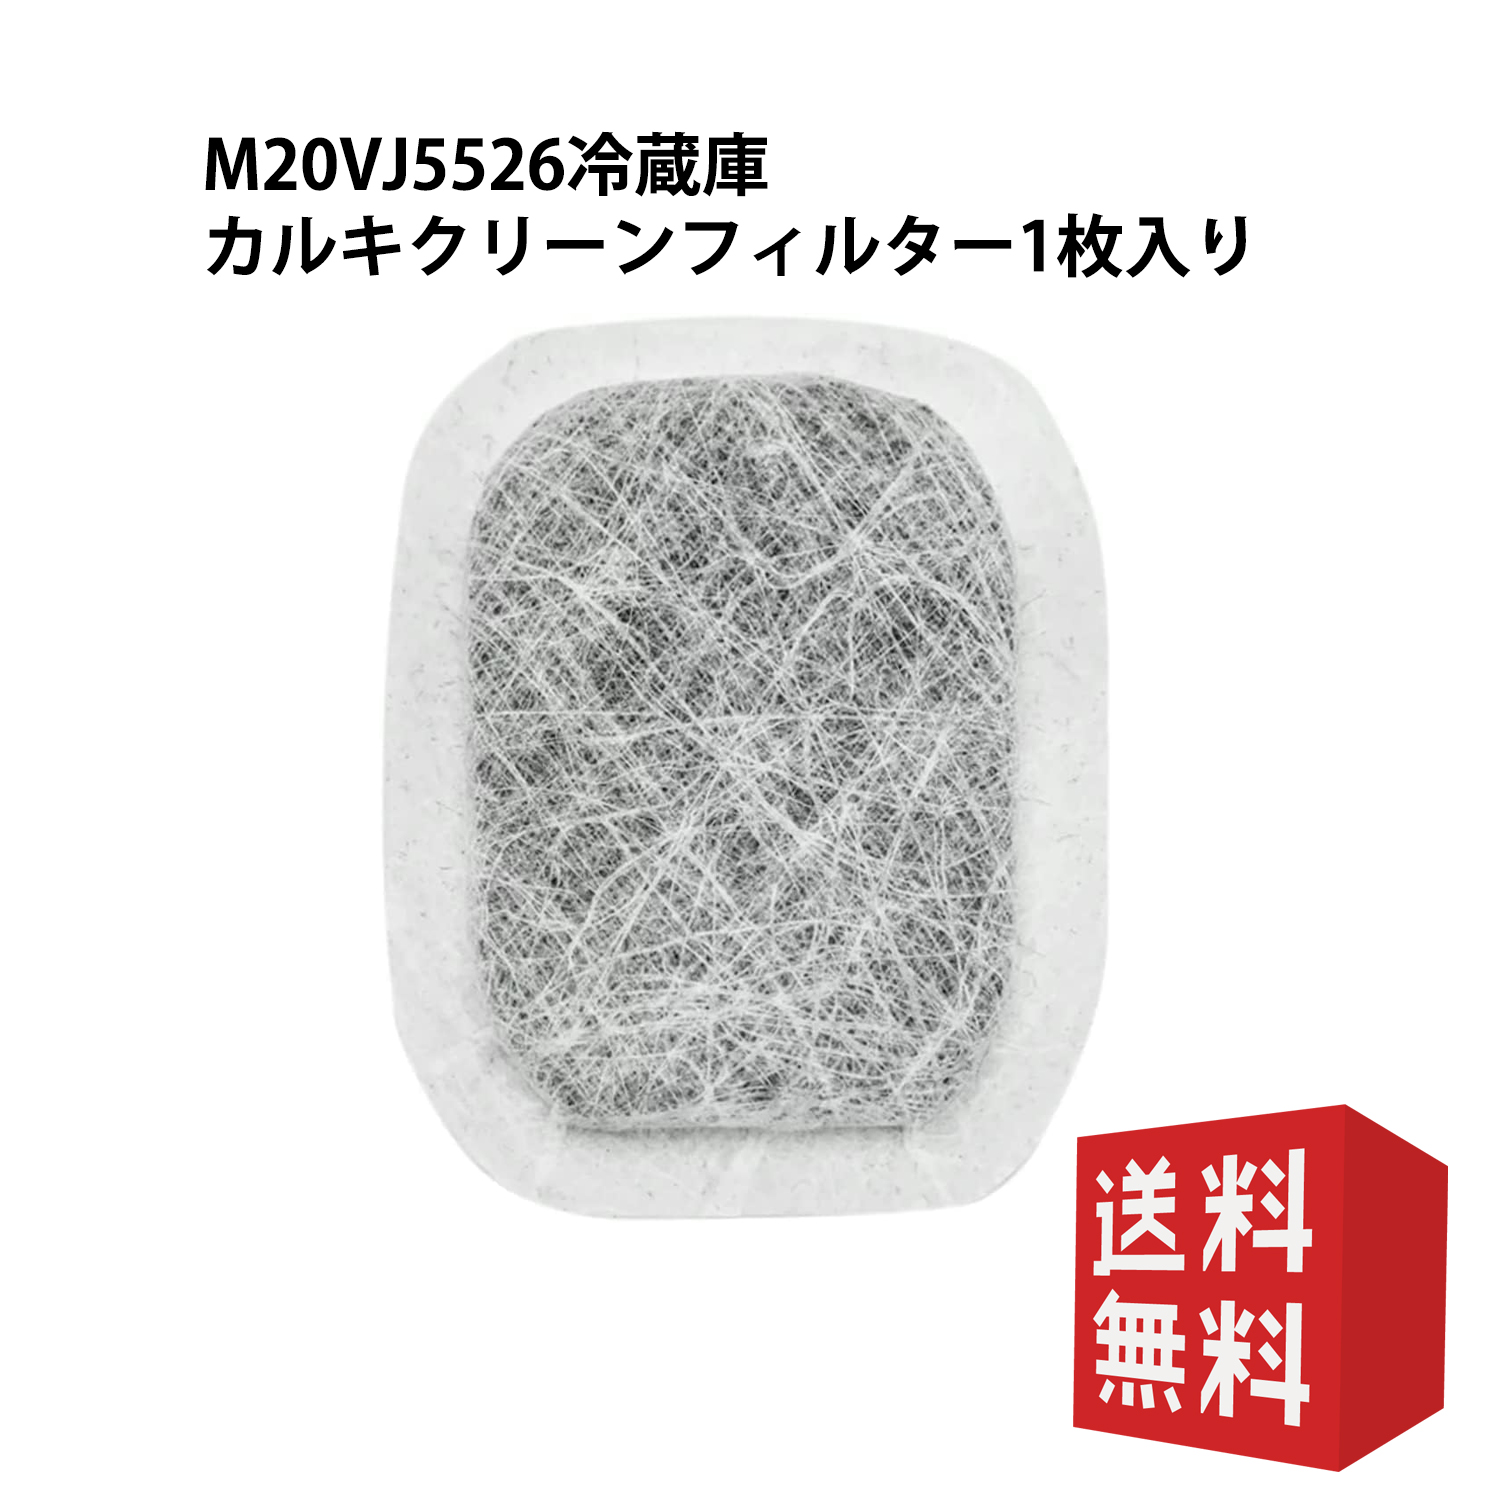 M20VJ5526 M20CM5526 Япония внутренний инспекция settled Mitsubishi Electric рефрижератор karuki clean фильтр MR-JX53Z m20vj5526 m20cm5526 1 листов ввод сменный товар 